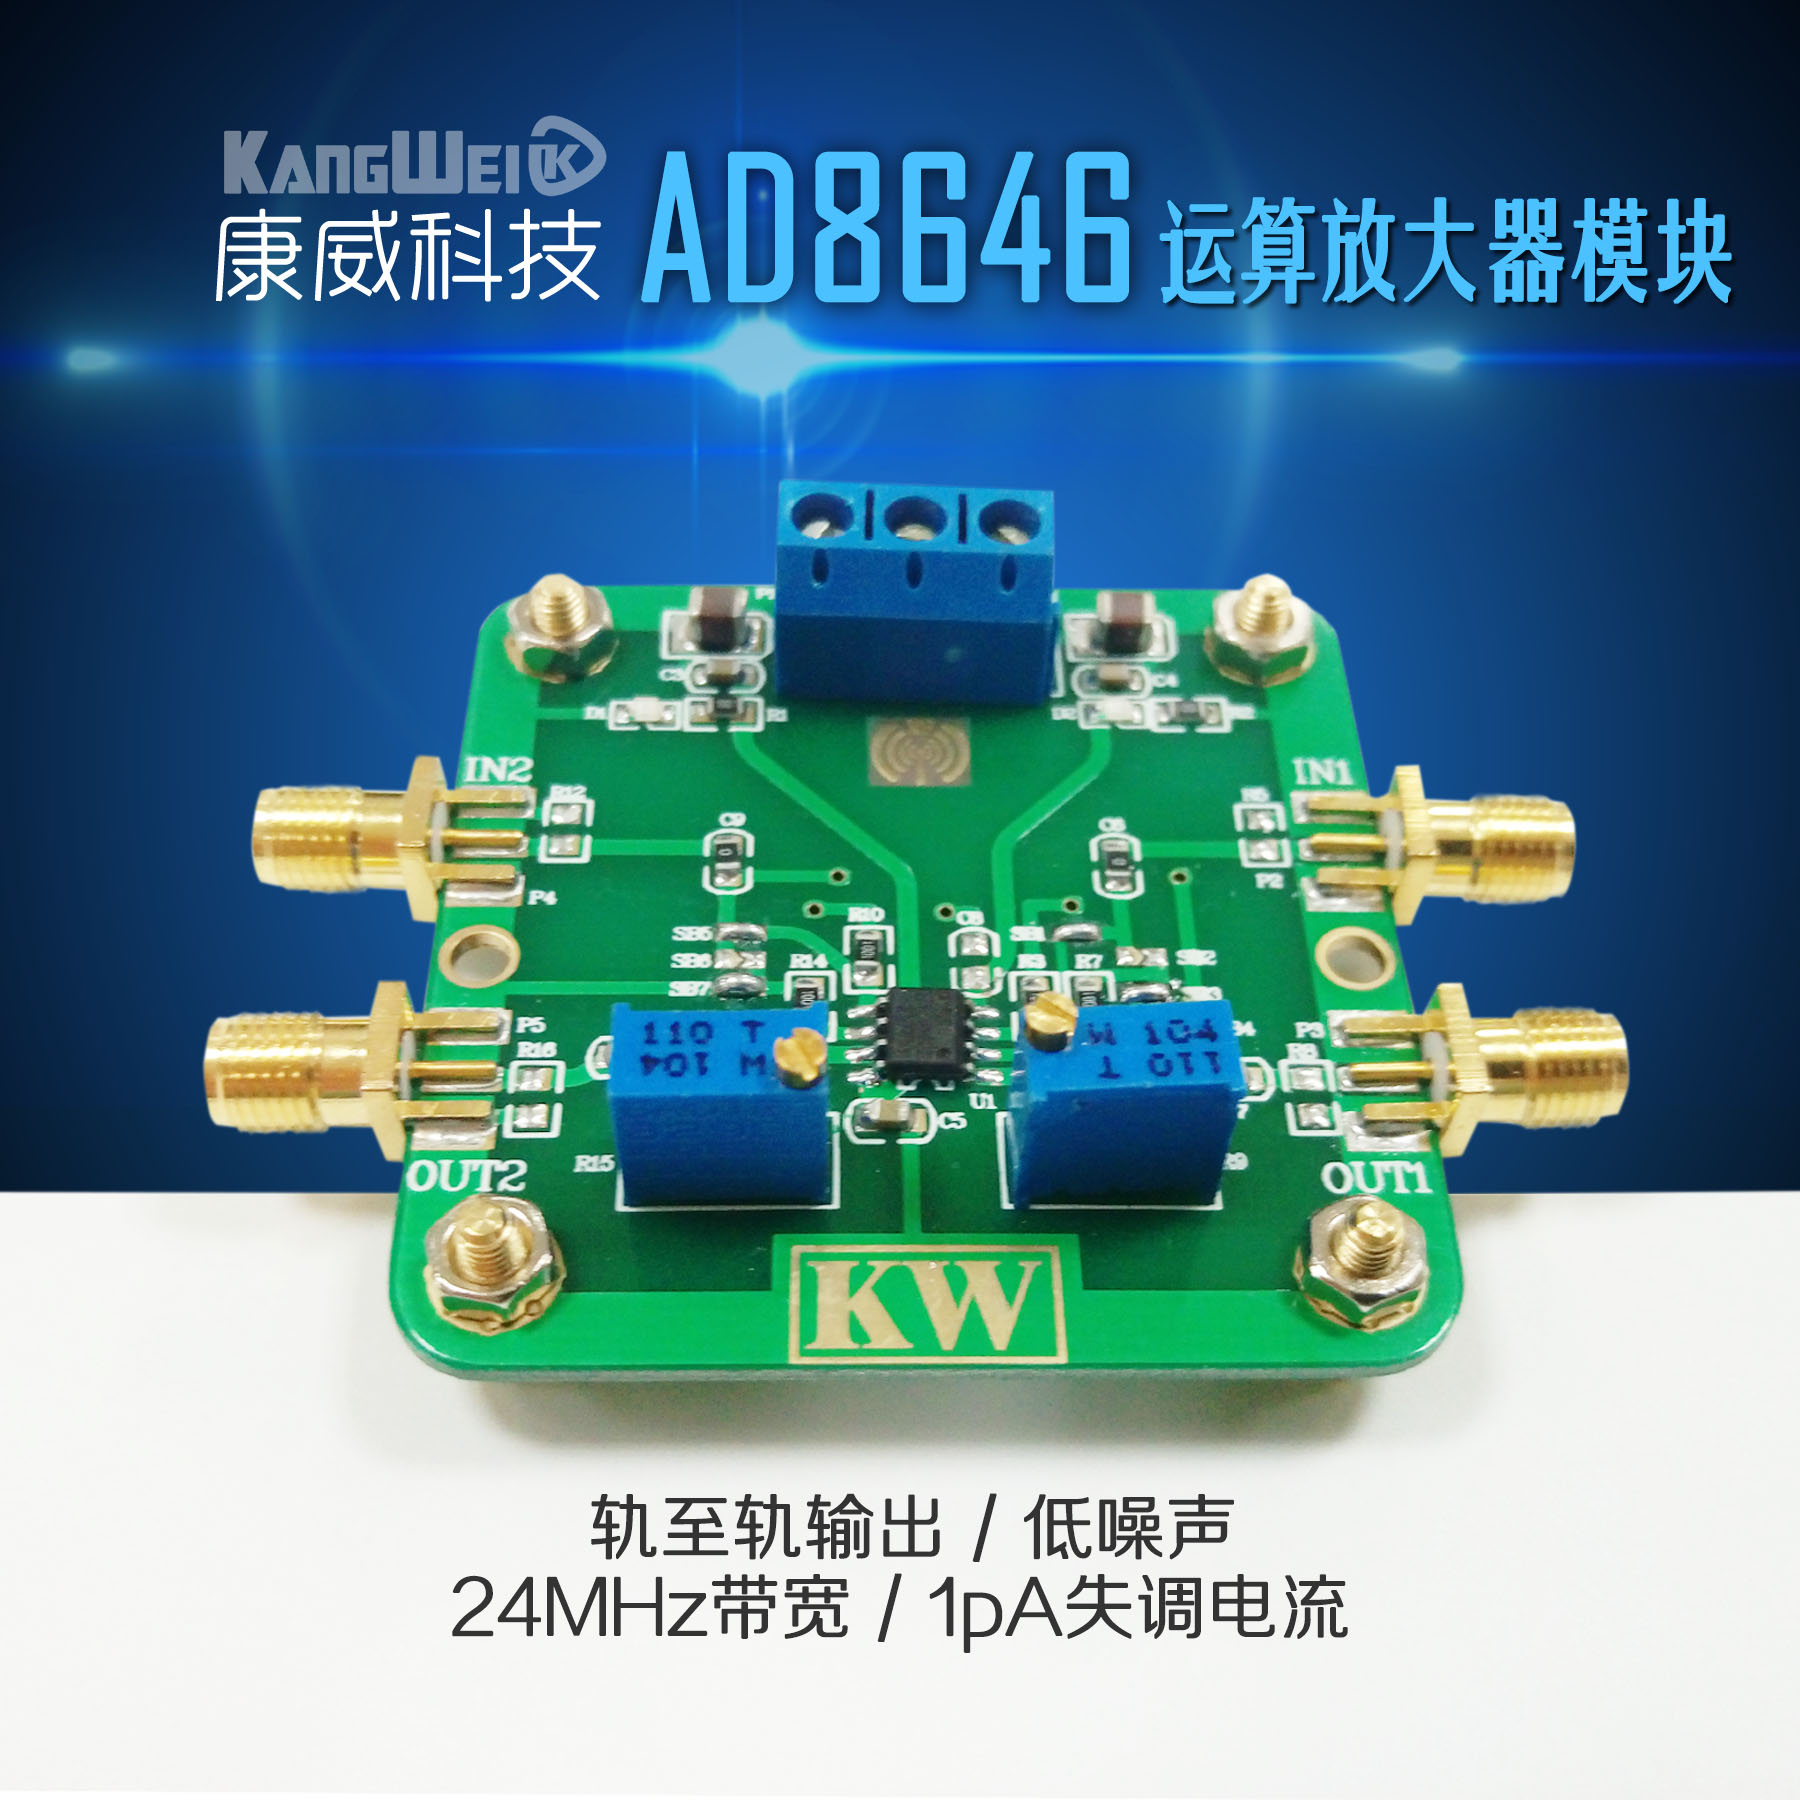 AD8646低噪聲運算放大器模塊 軌至軌輸出 24MHz帶寬 1pA失調電流